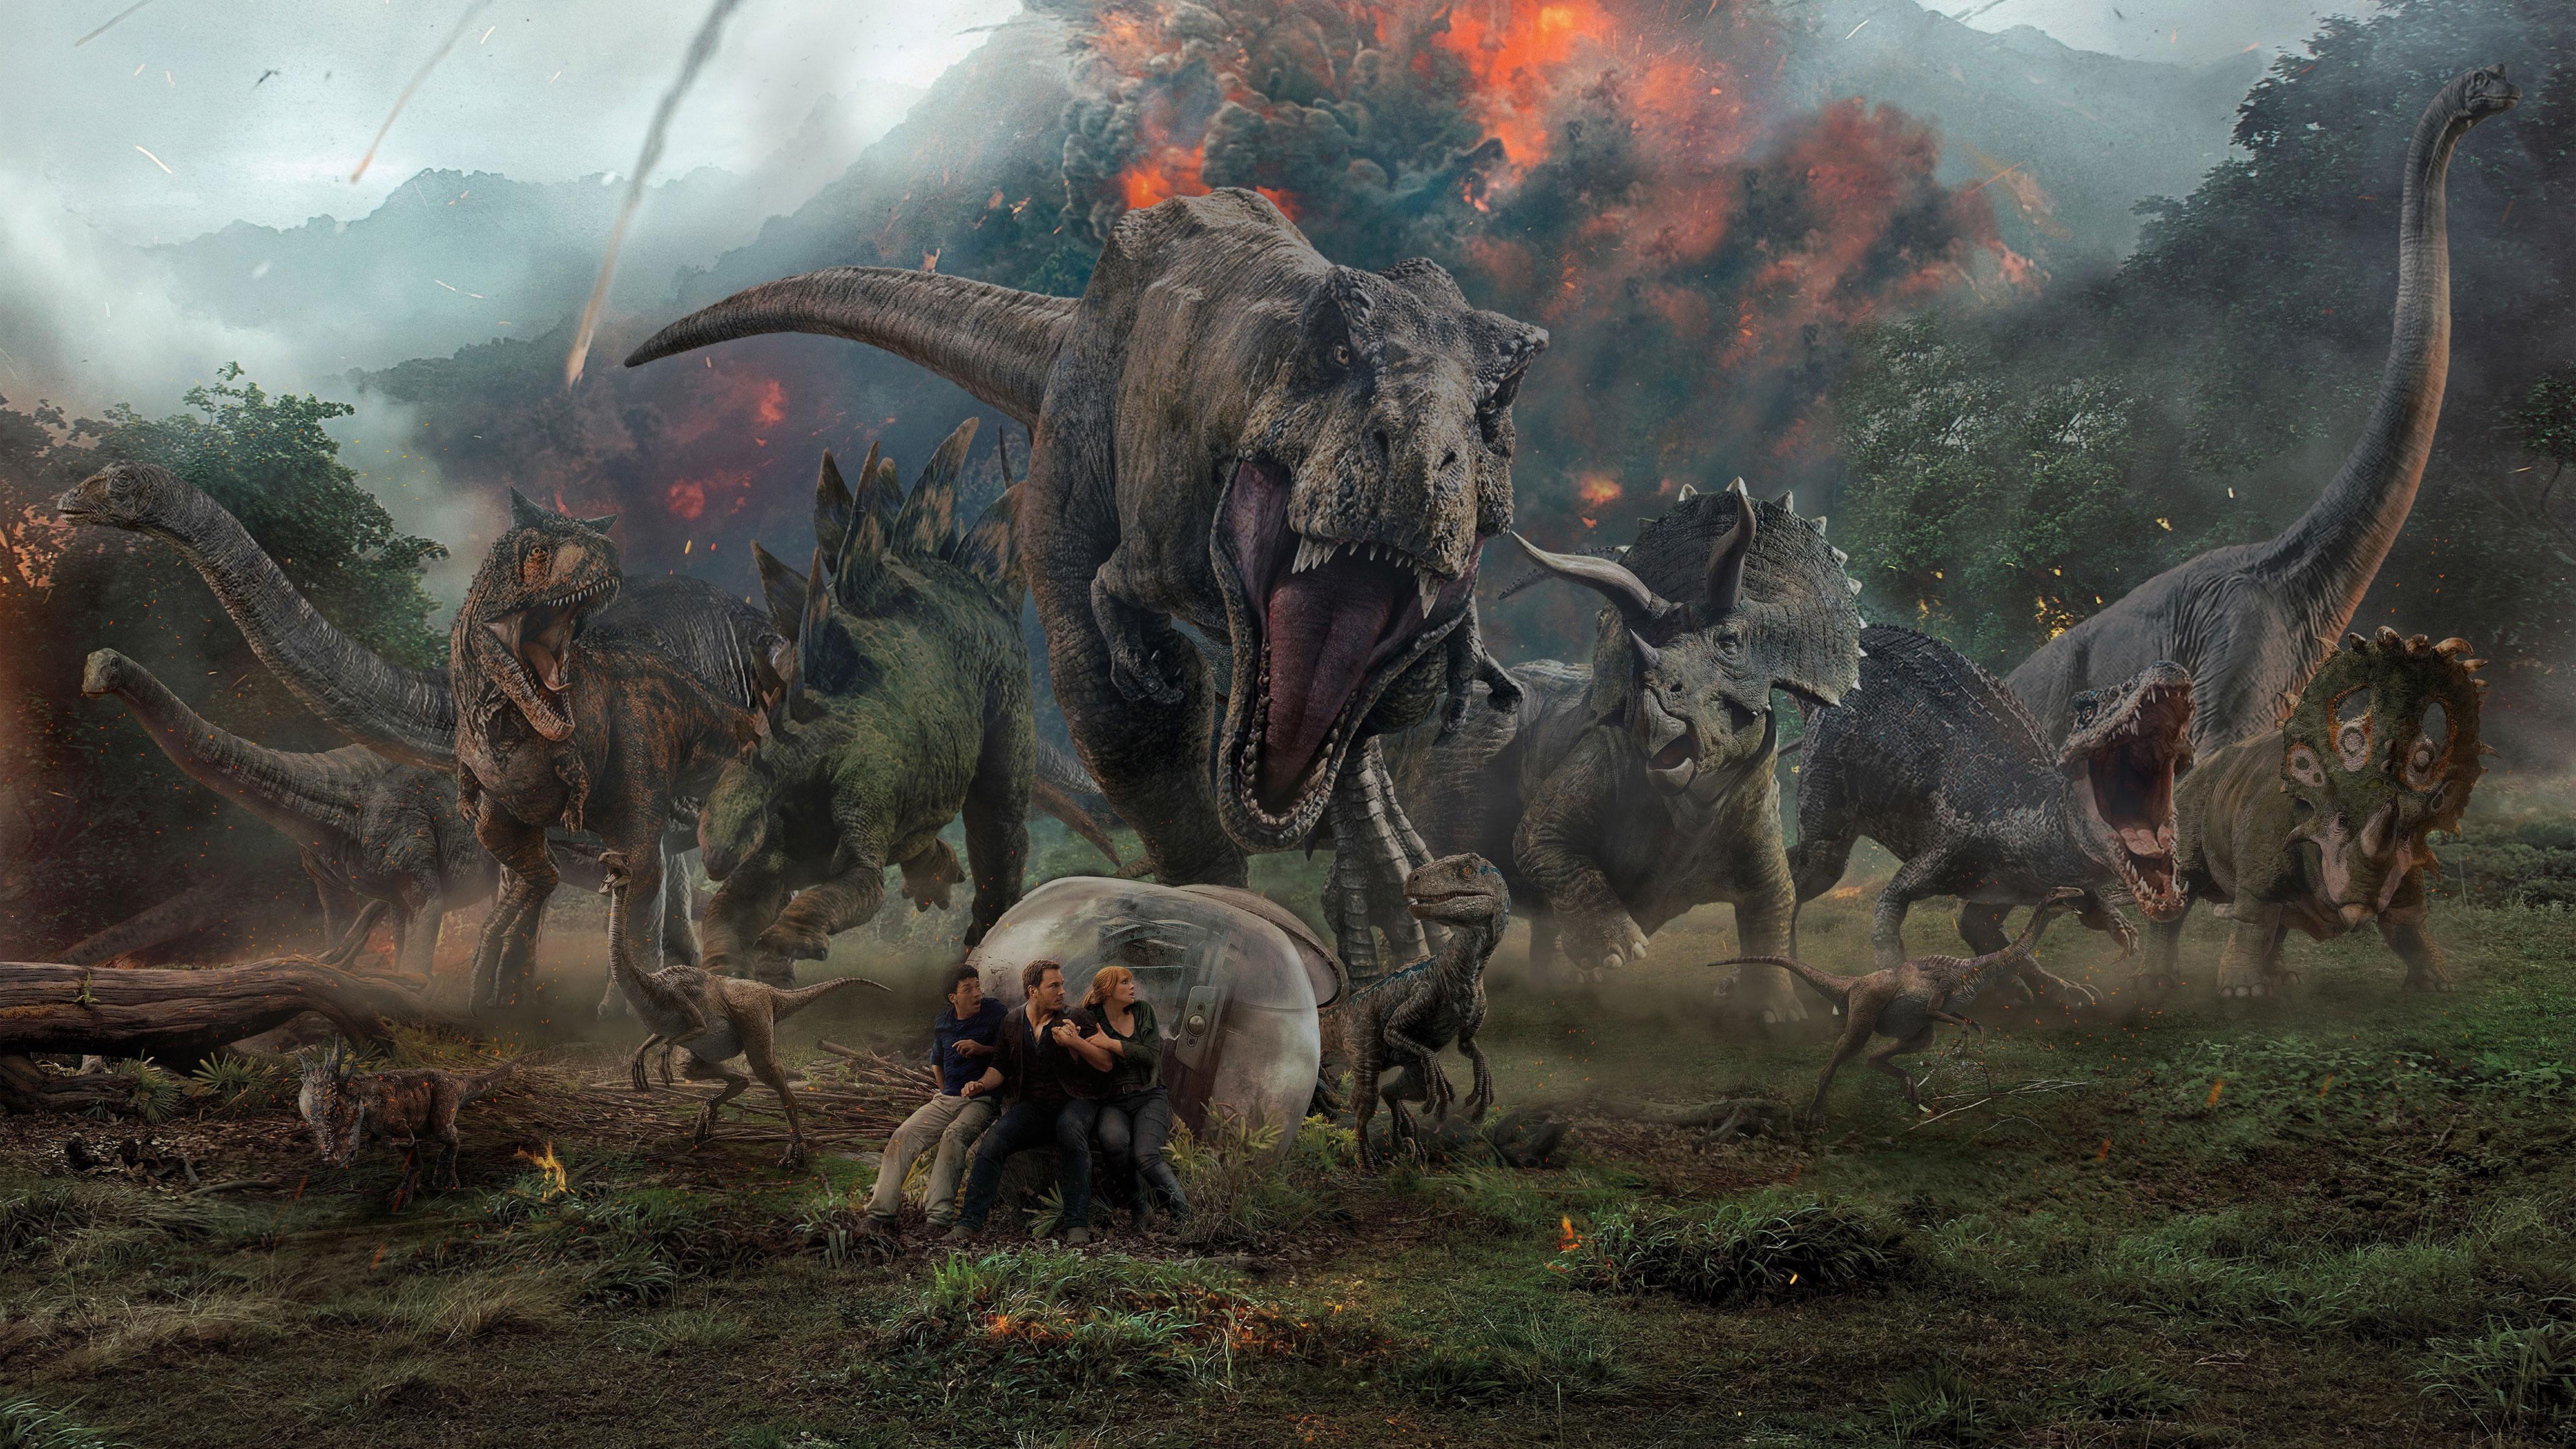 100+] Jurassic Park Wallpapers | Wallpapers.com